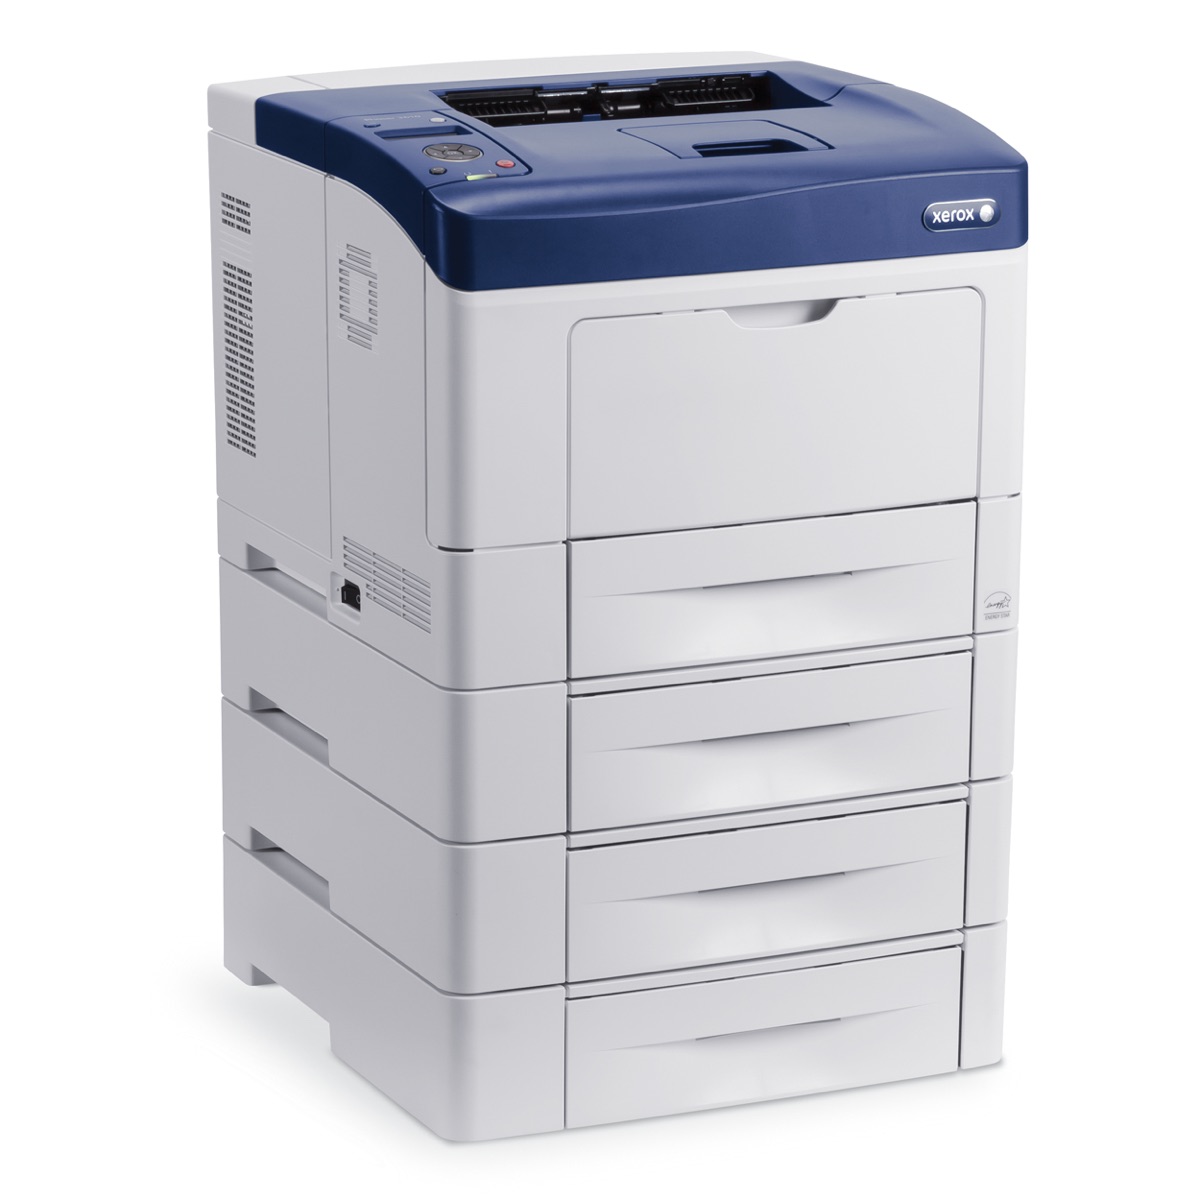 Xerox Printers:  The Xerox Phaser 3610N Printer